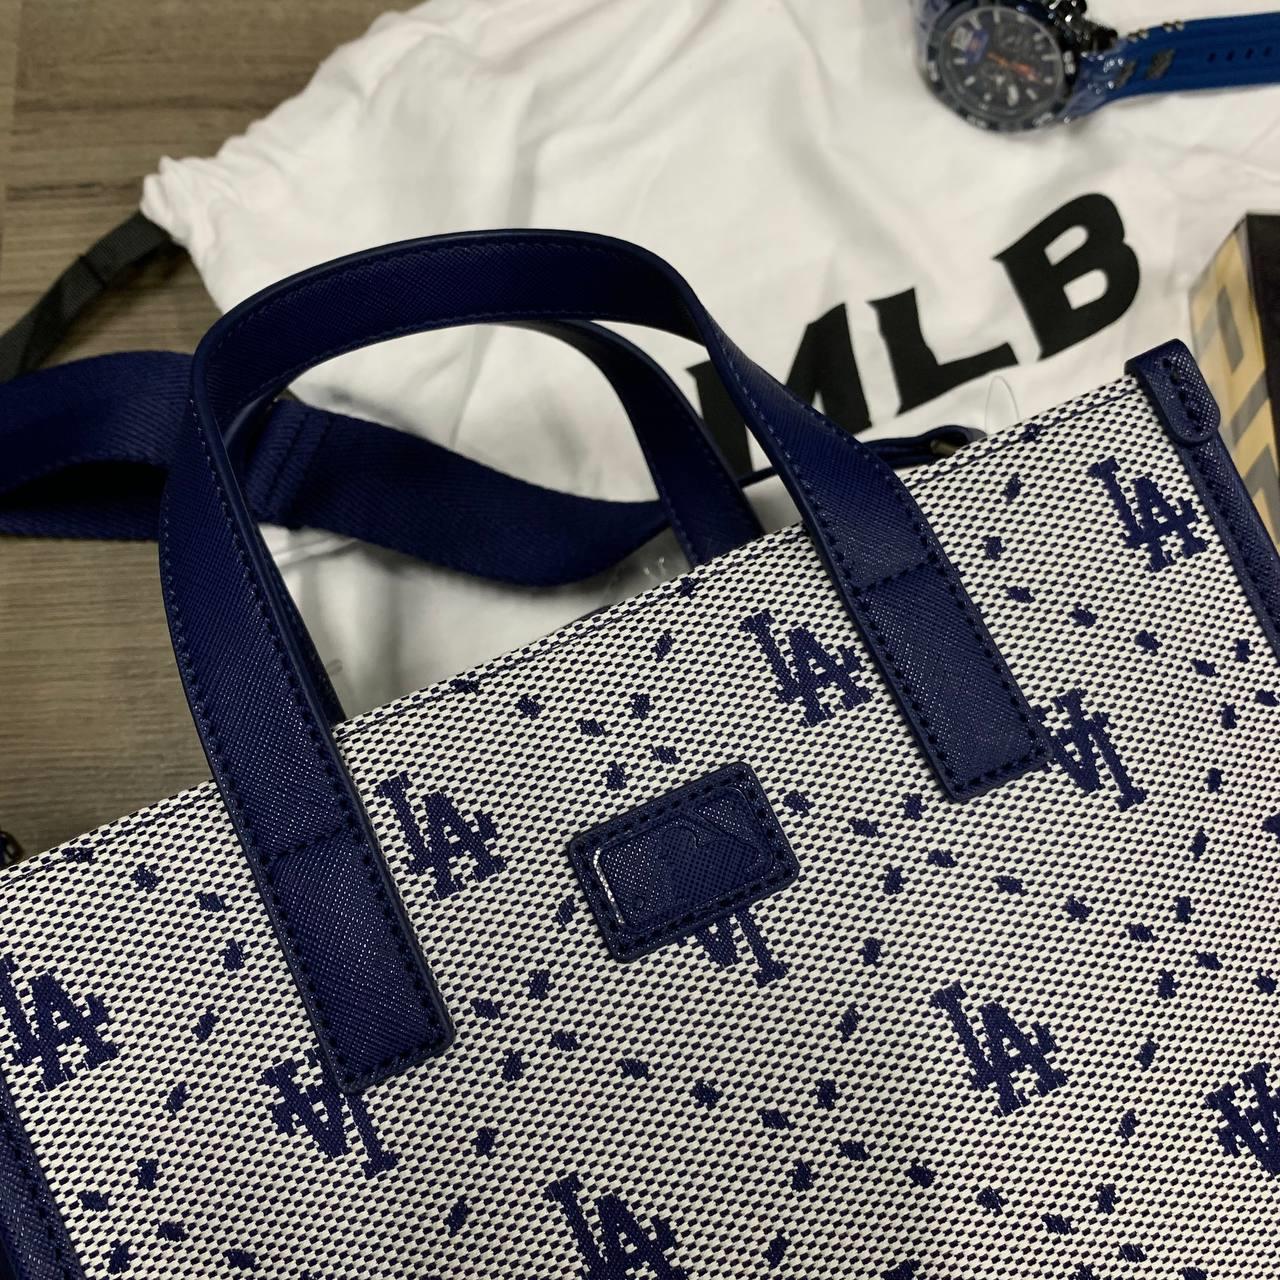 MLB Big Dia Monogram Jacquard Large Tote Bag LA Dodgers Navy, Totes for  Women